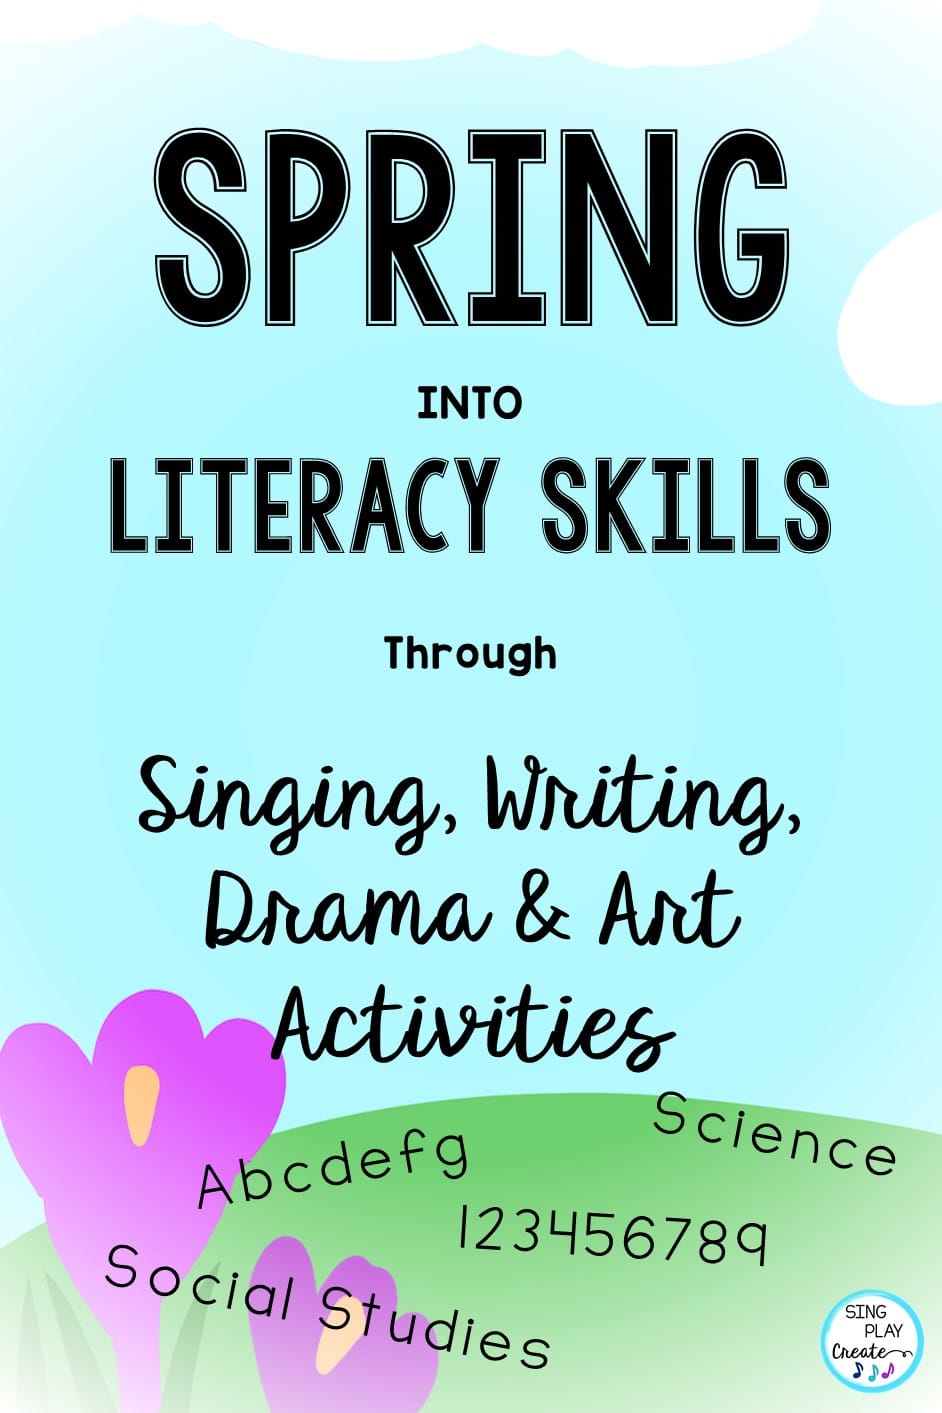 https://www.singplaycreate.com/2015/04/spring-in-to-literacy-skills-throug.html